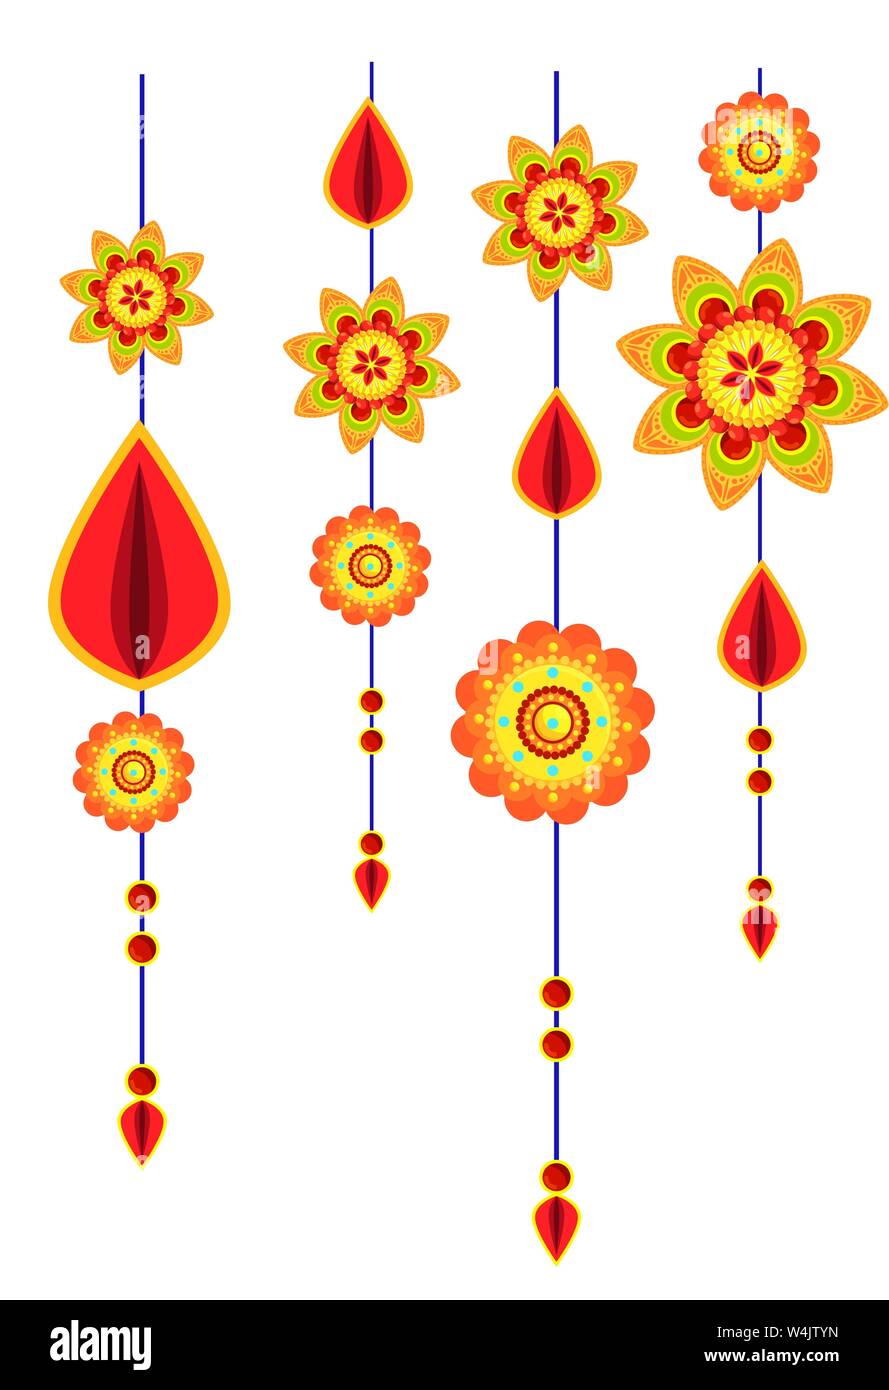 Mandalas colgantes decorativos de estilo boho Imagen de stock - Alamy